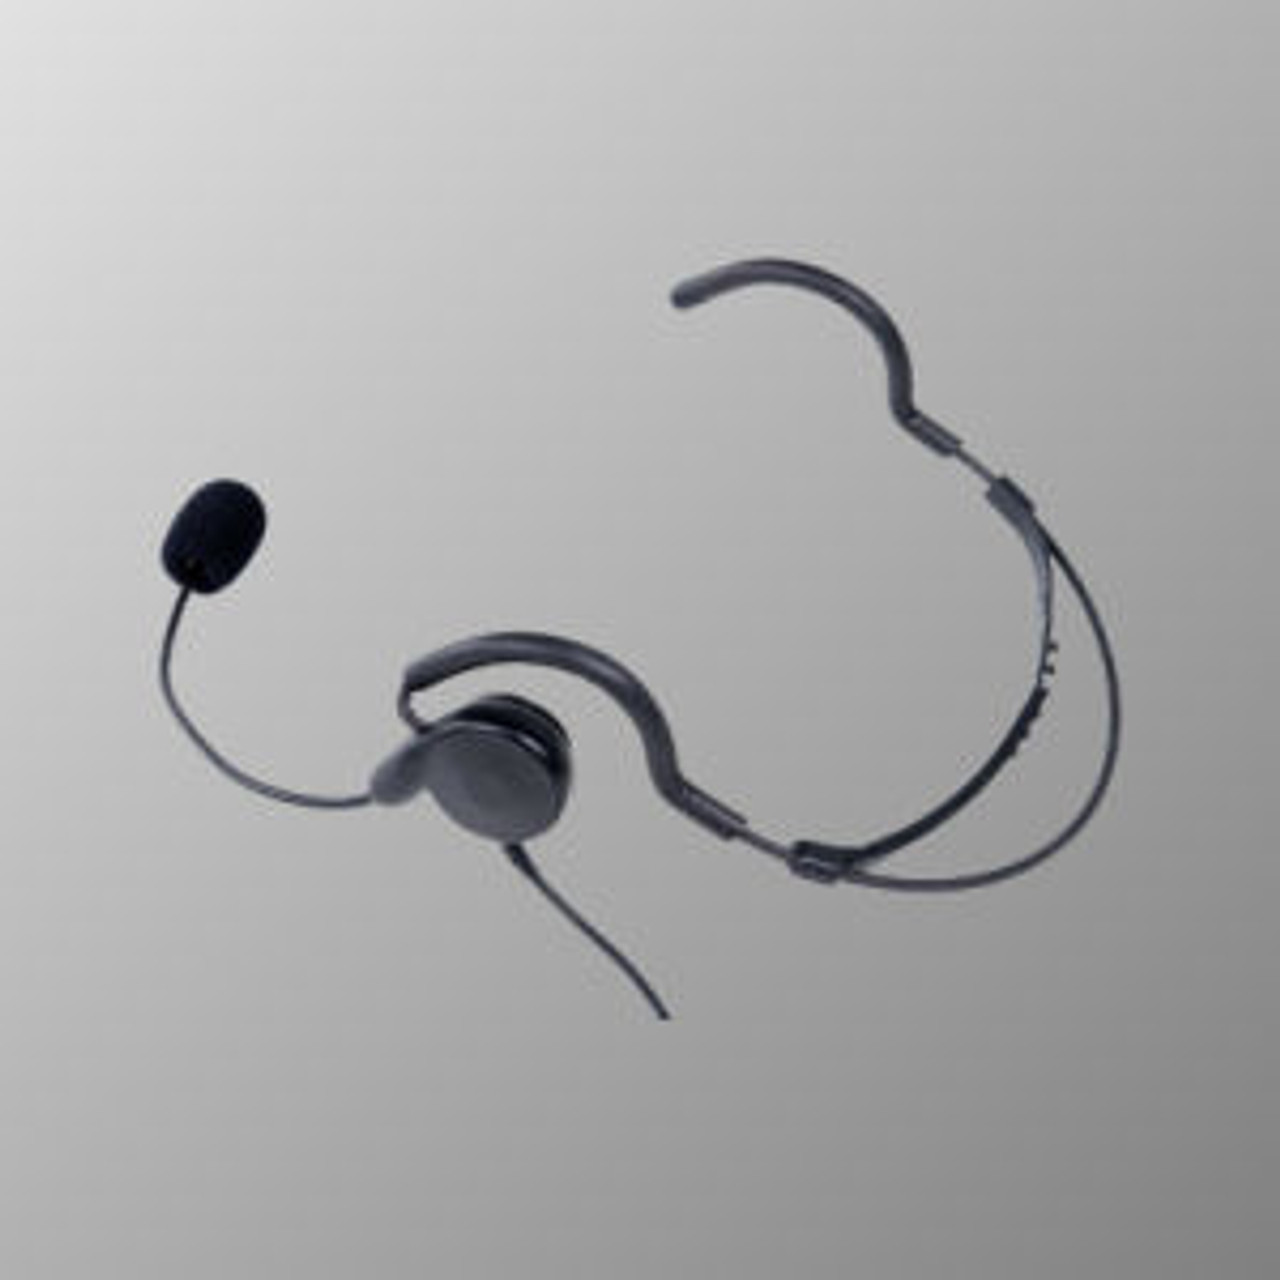 Motorola RMU2040 Behind The Head Single Muff Noise Canceling Headset